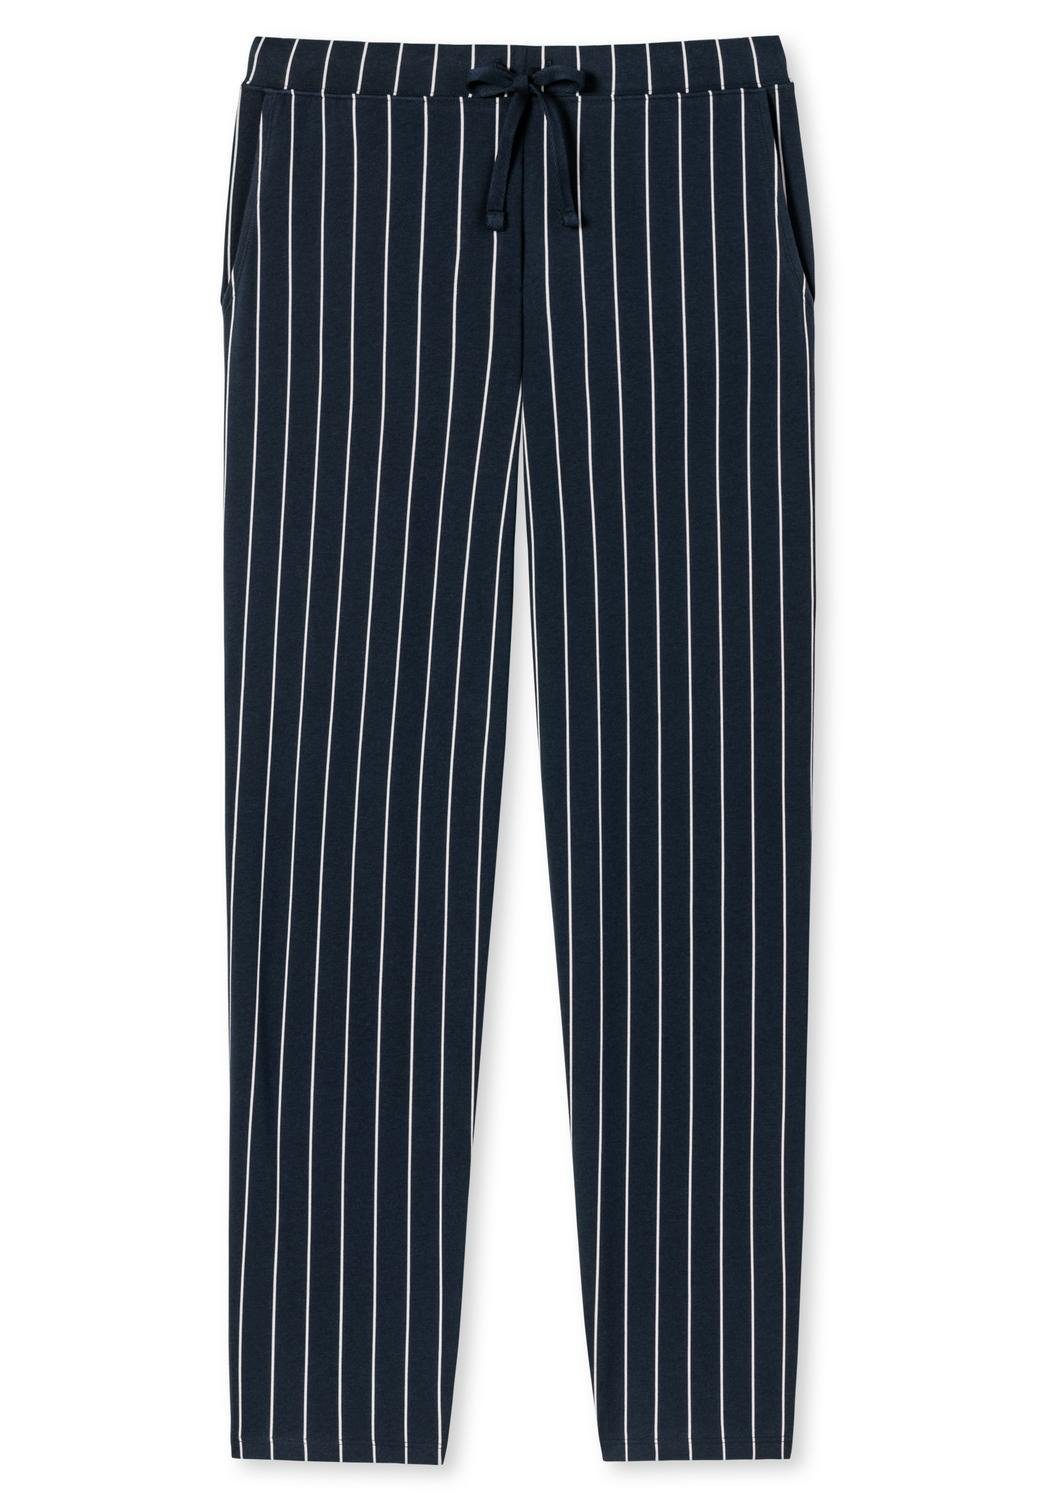 Schiesser sonstige 1 multicolor Hose lang, Pyjama